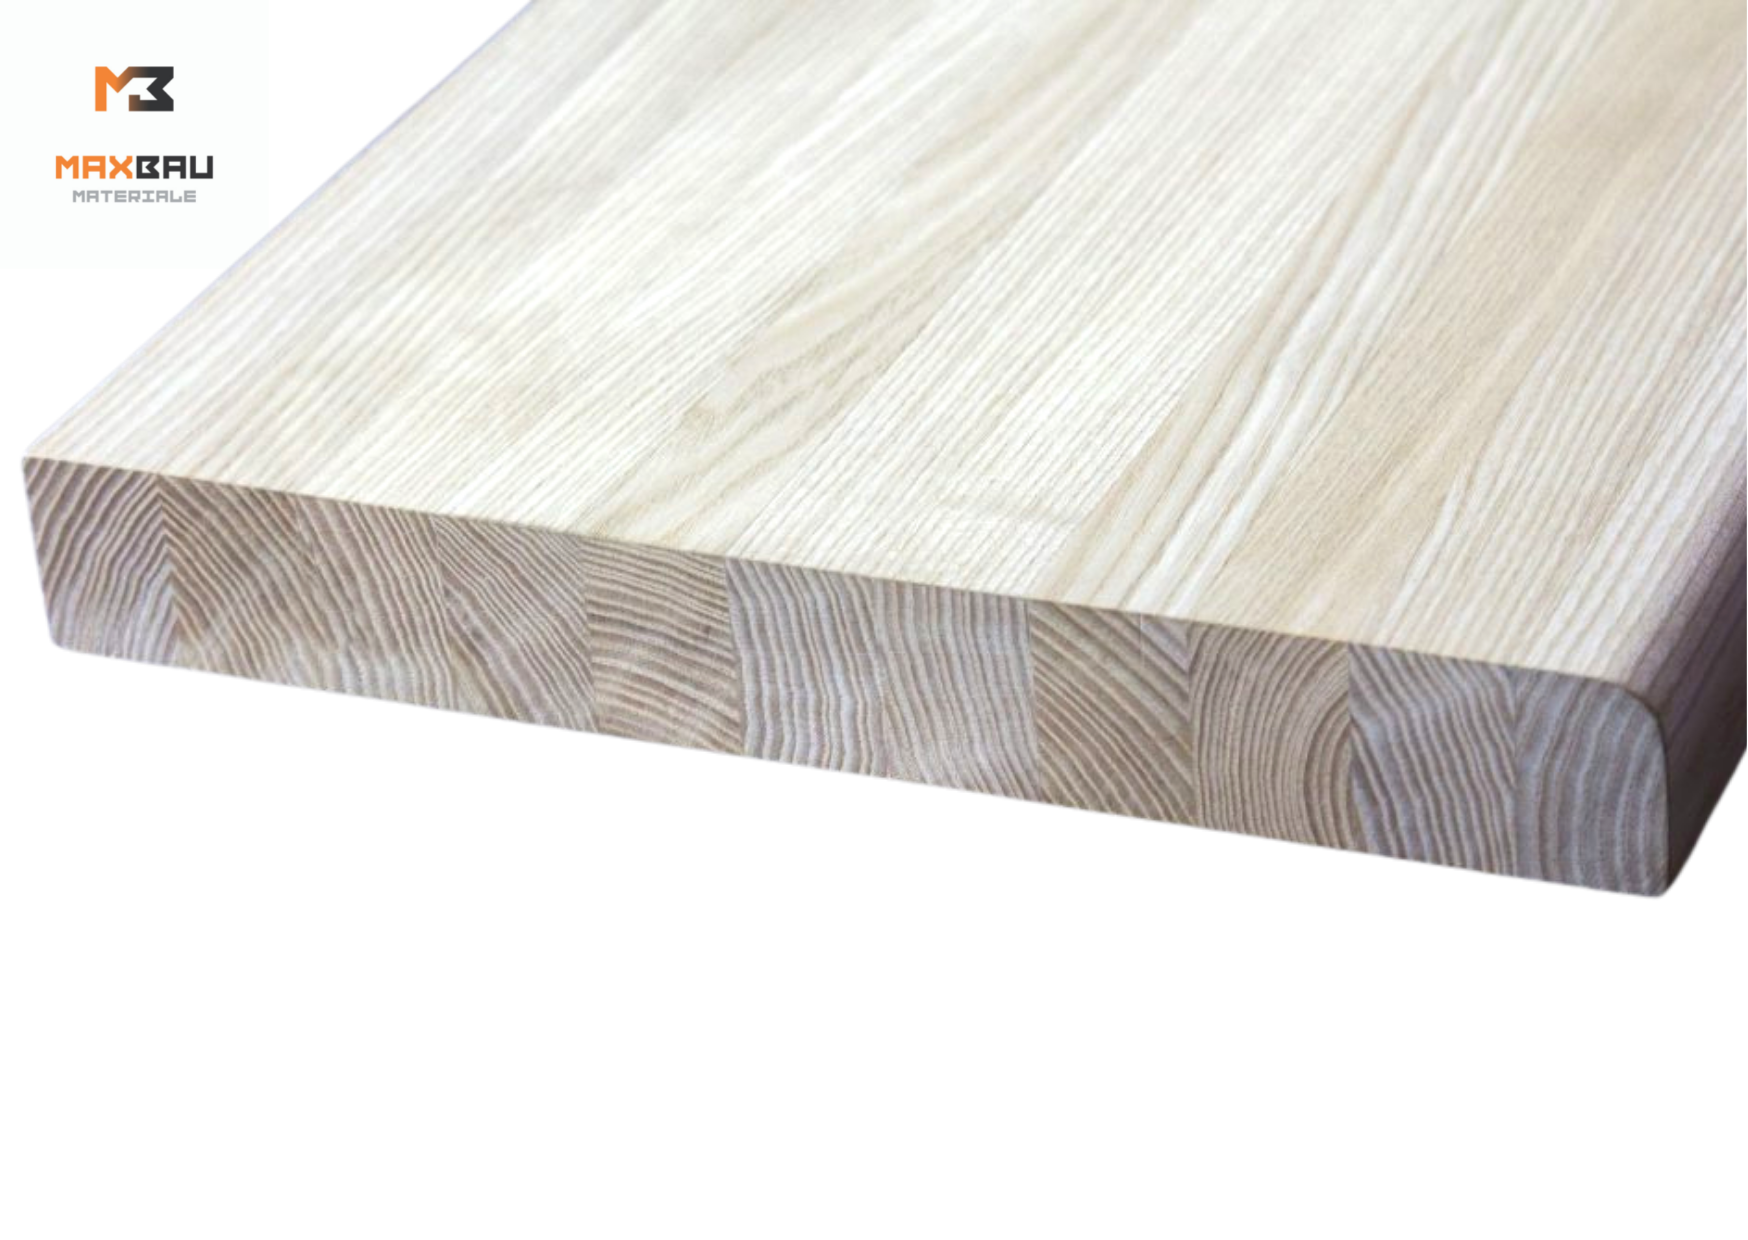 Plates of glued wood - MaxBau wooden plate glued 2000 x 400 x 28 mm class AB, https:maxbau.ro